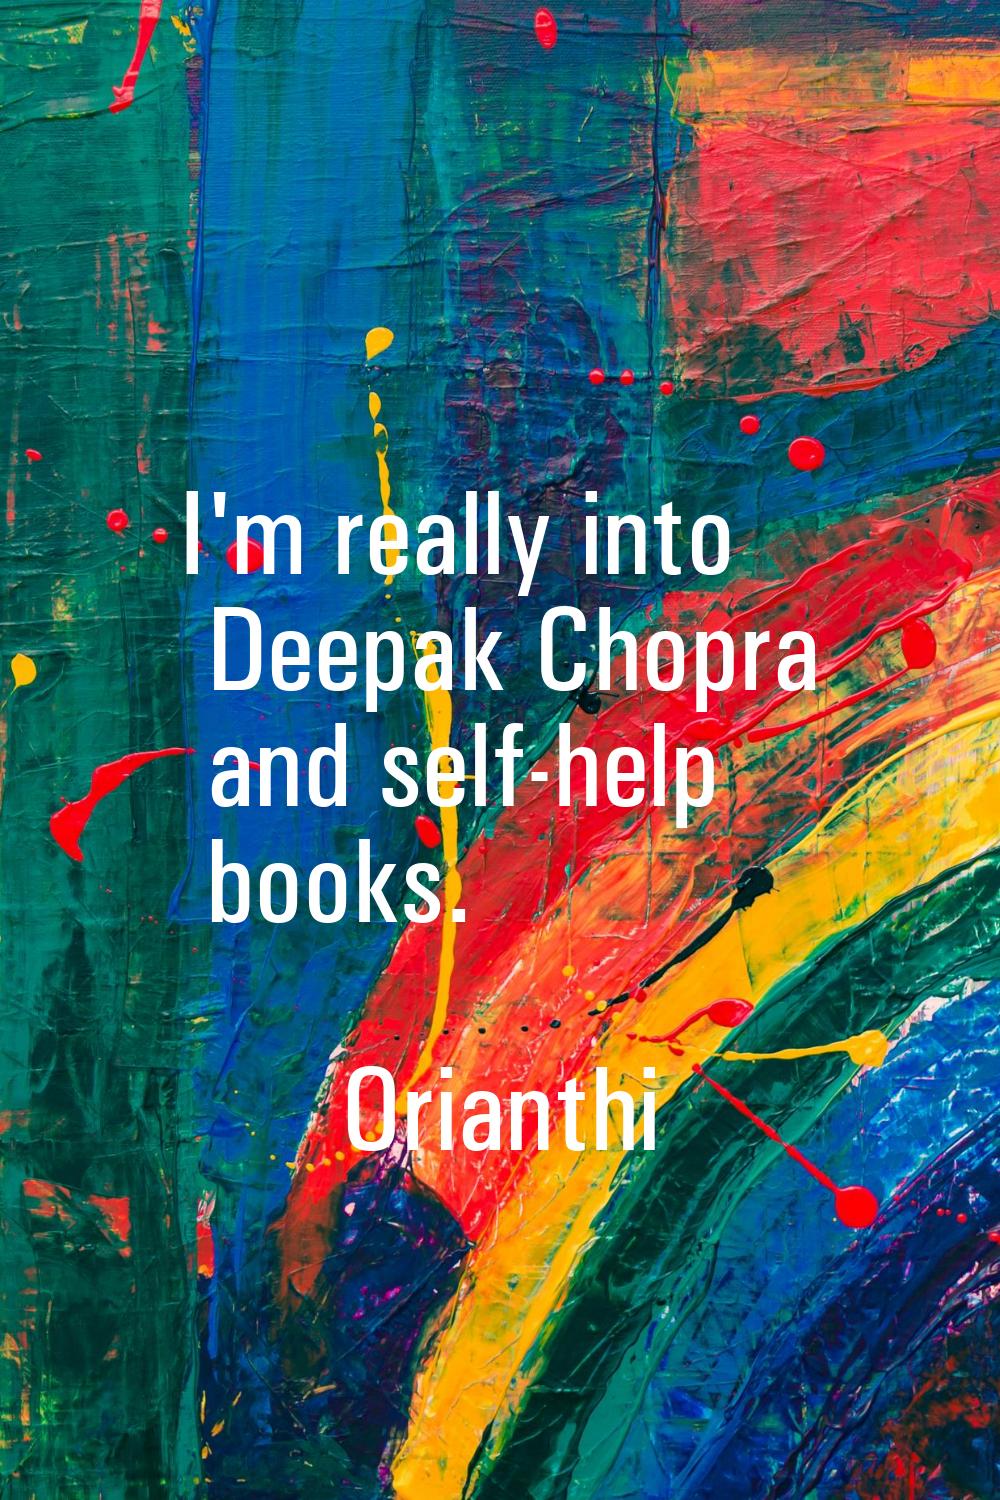 I'm really into Deepak Chopra and self-help books.